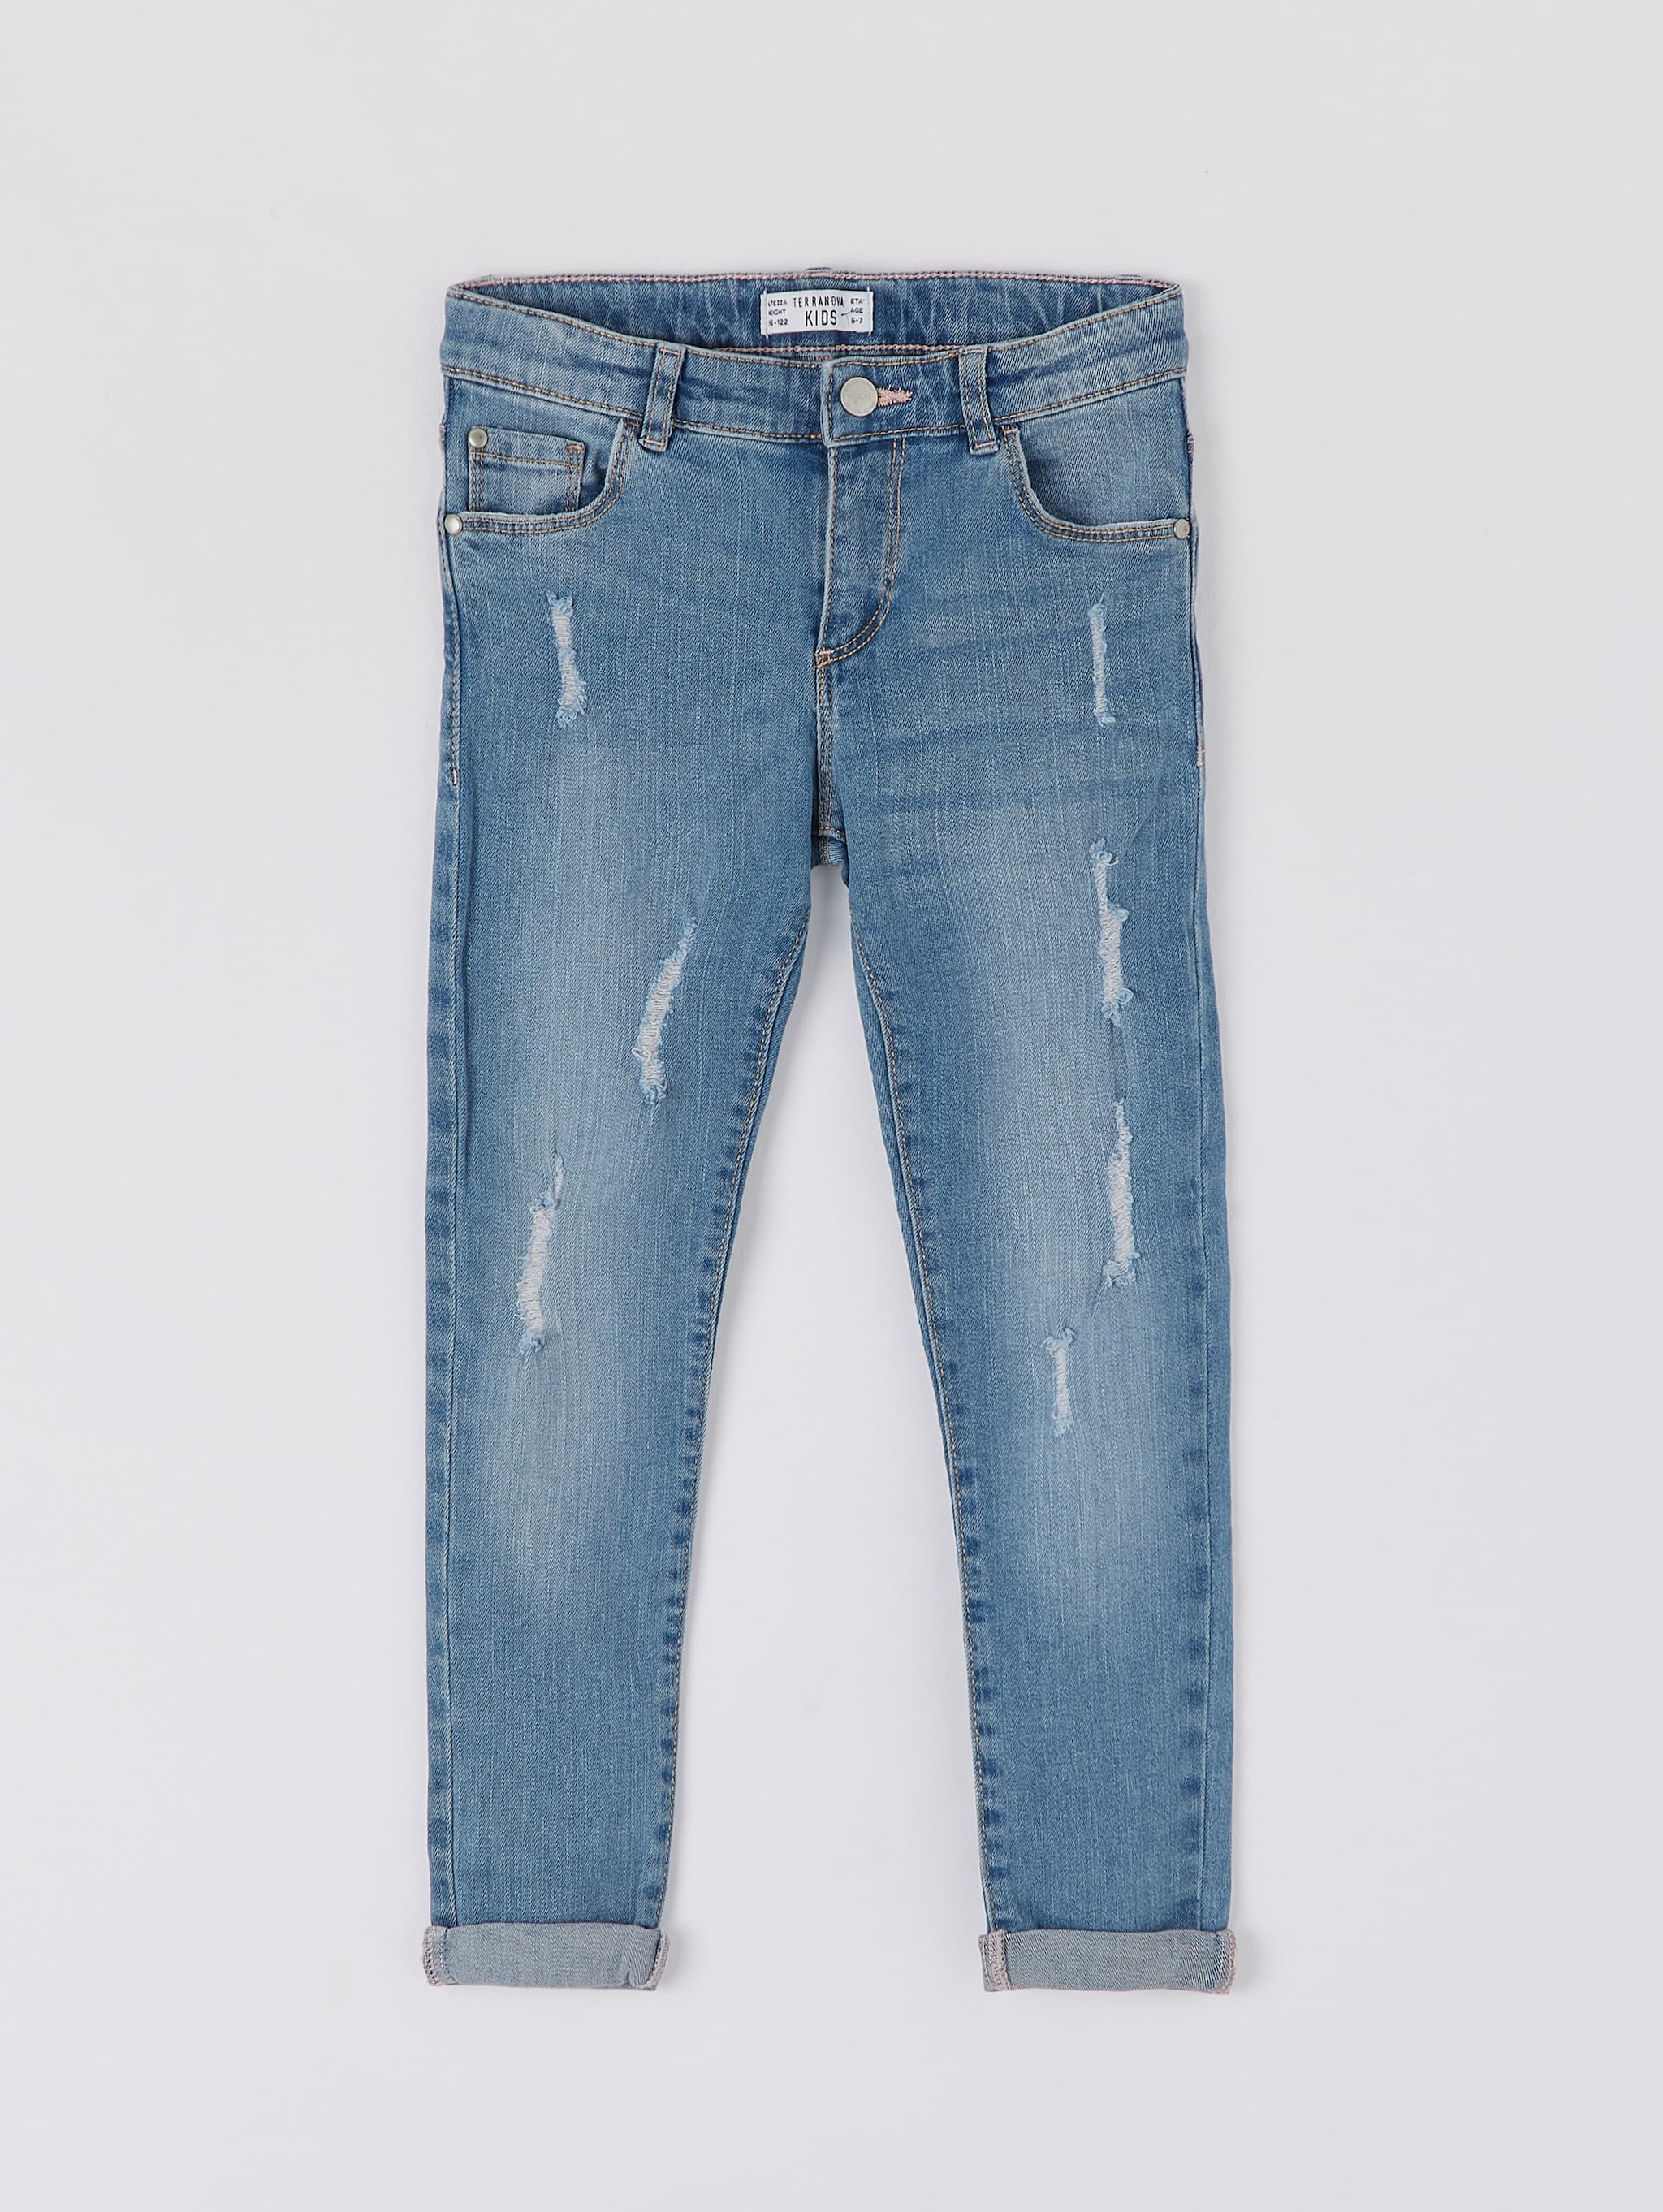 light denim distressed jeans